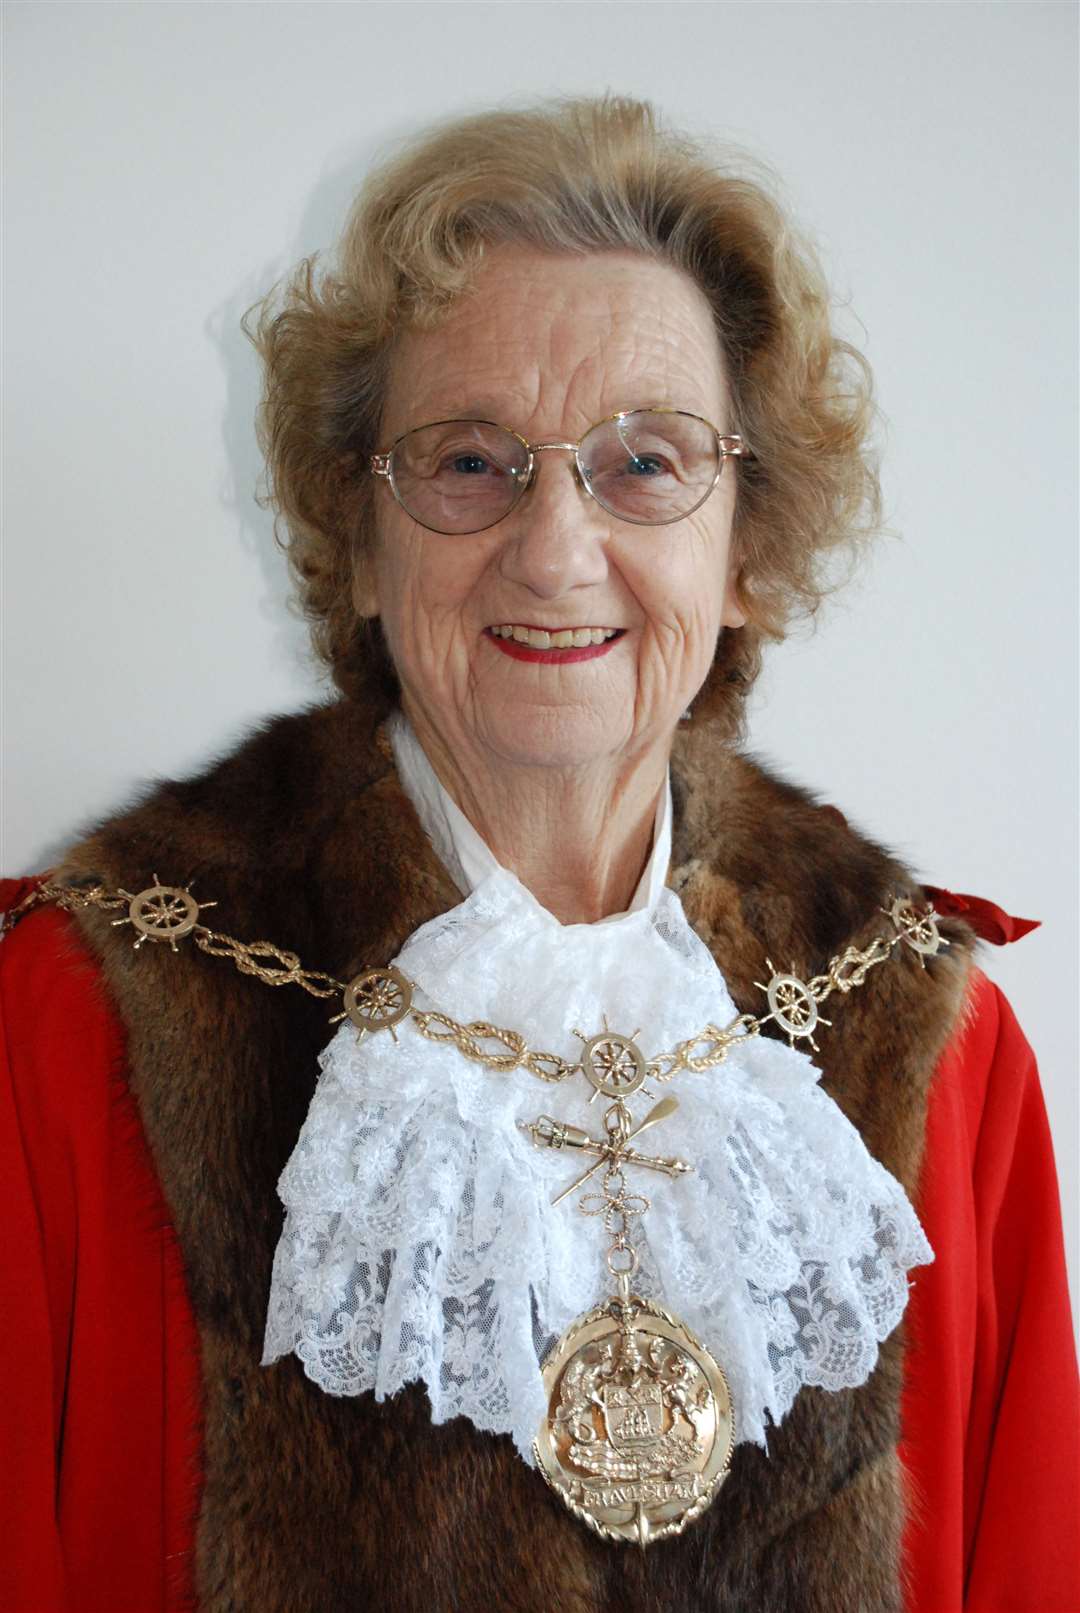 Pat Oakeshott was Mayor of Gravesham in 2007. Picture: Gravesham Borough Council